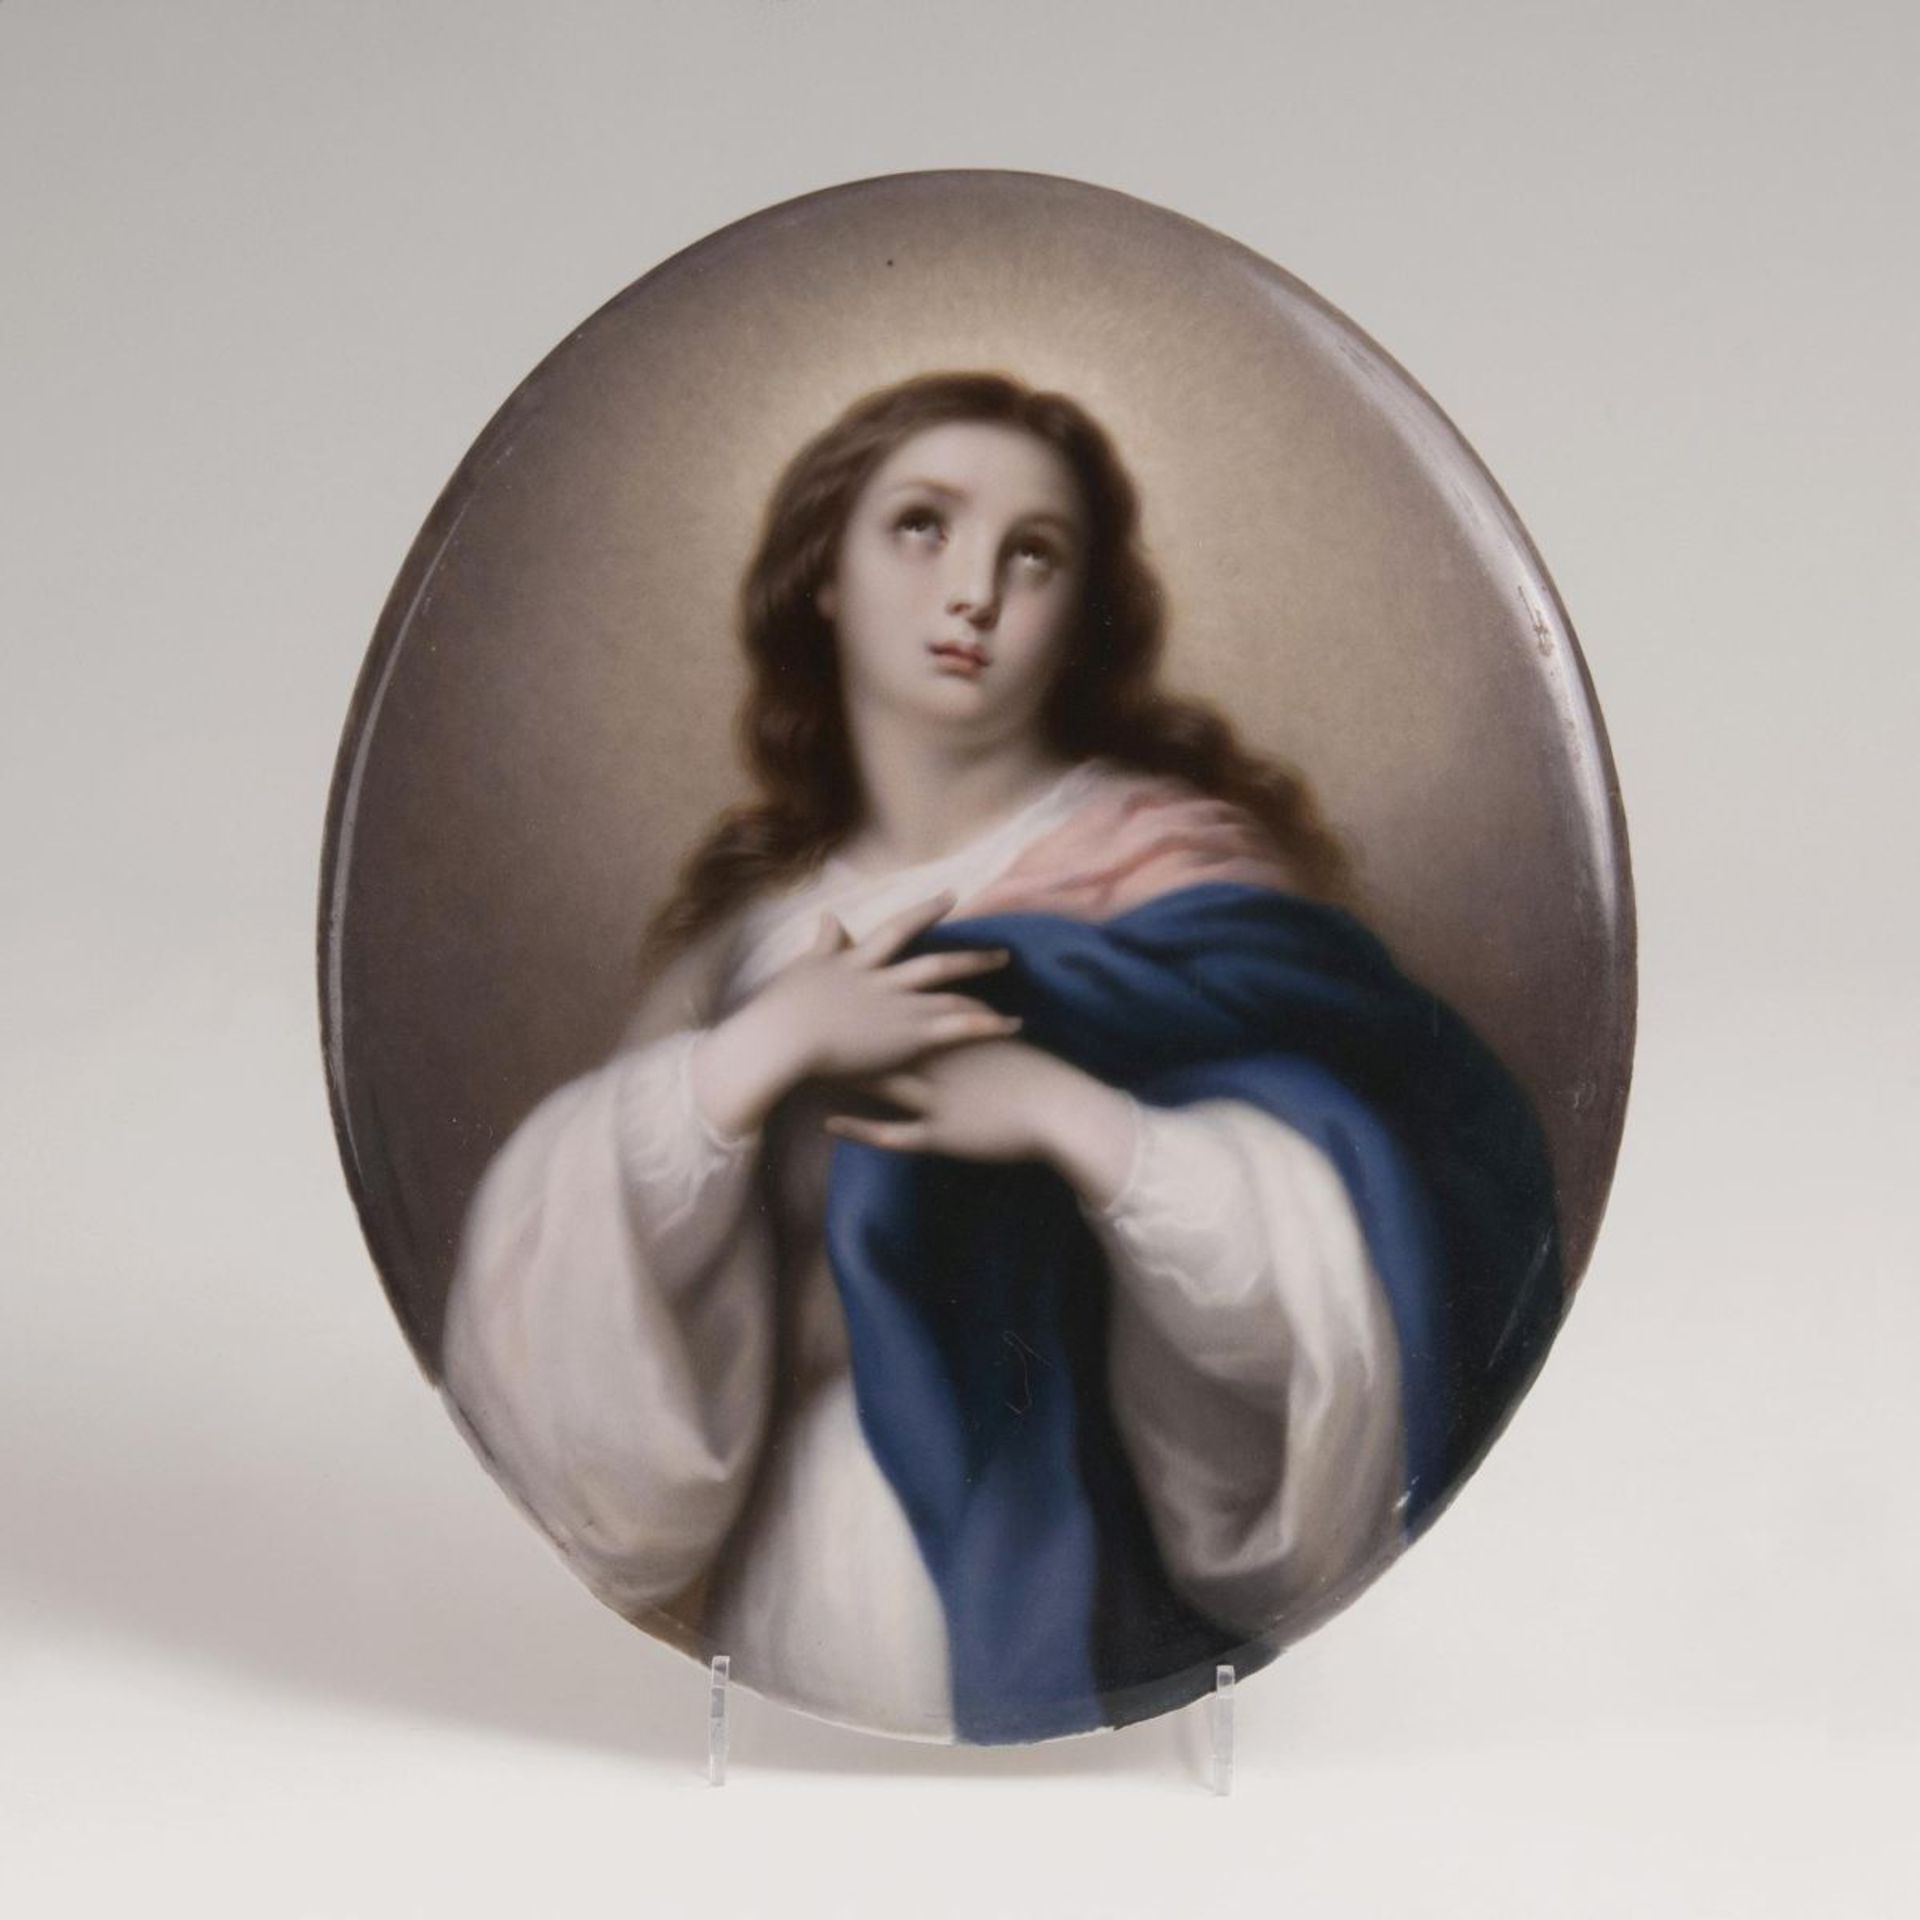 Ovale Bildplatte 'Maria Magdalena'Berlin, KPM, Ende 19. Jh. Porzellan. Fein gemalte Darstellung nach